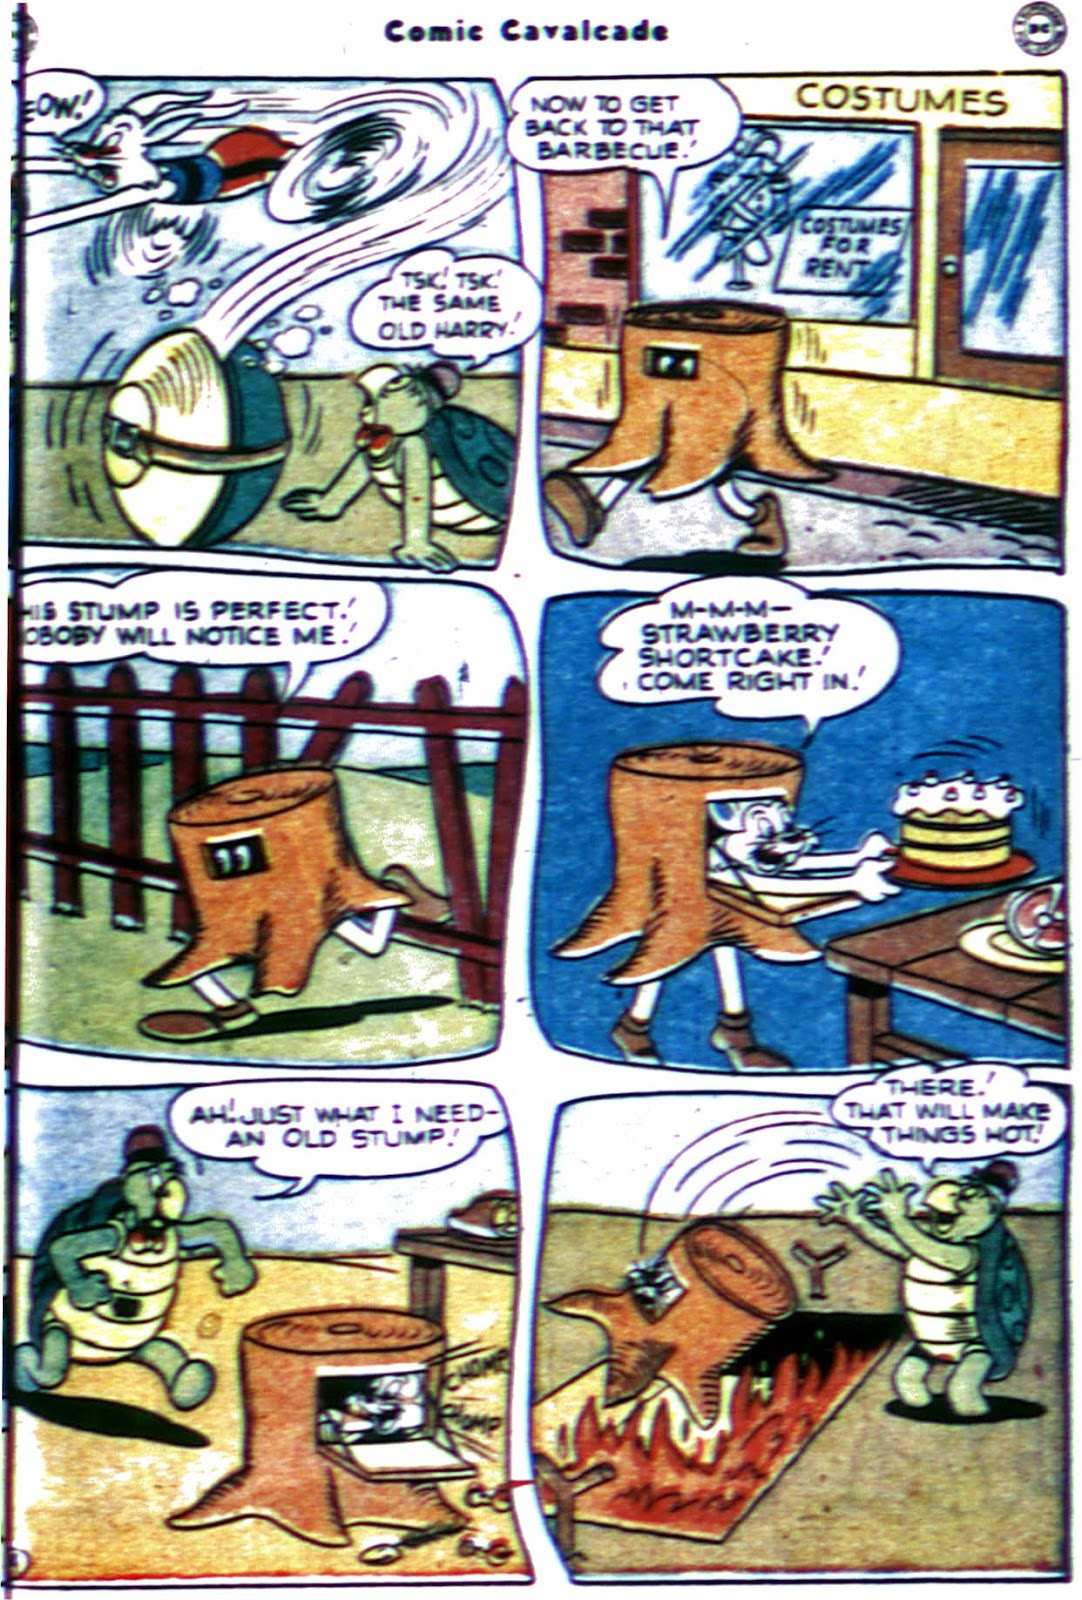 Comic Cavalcade issue 30 - Page 23